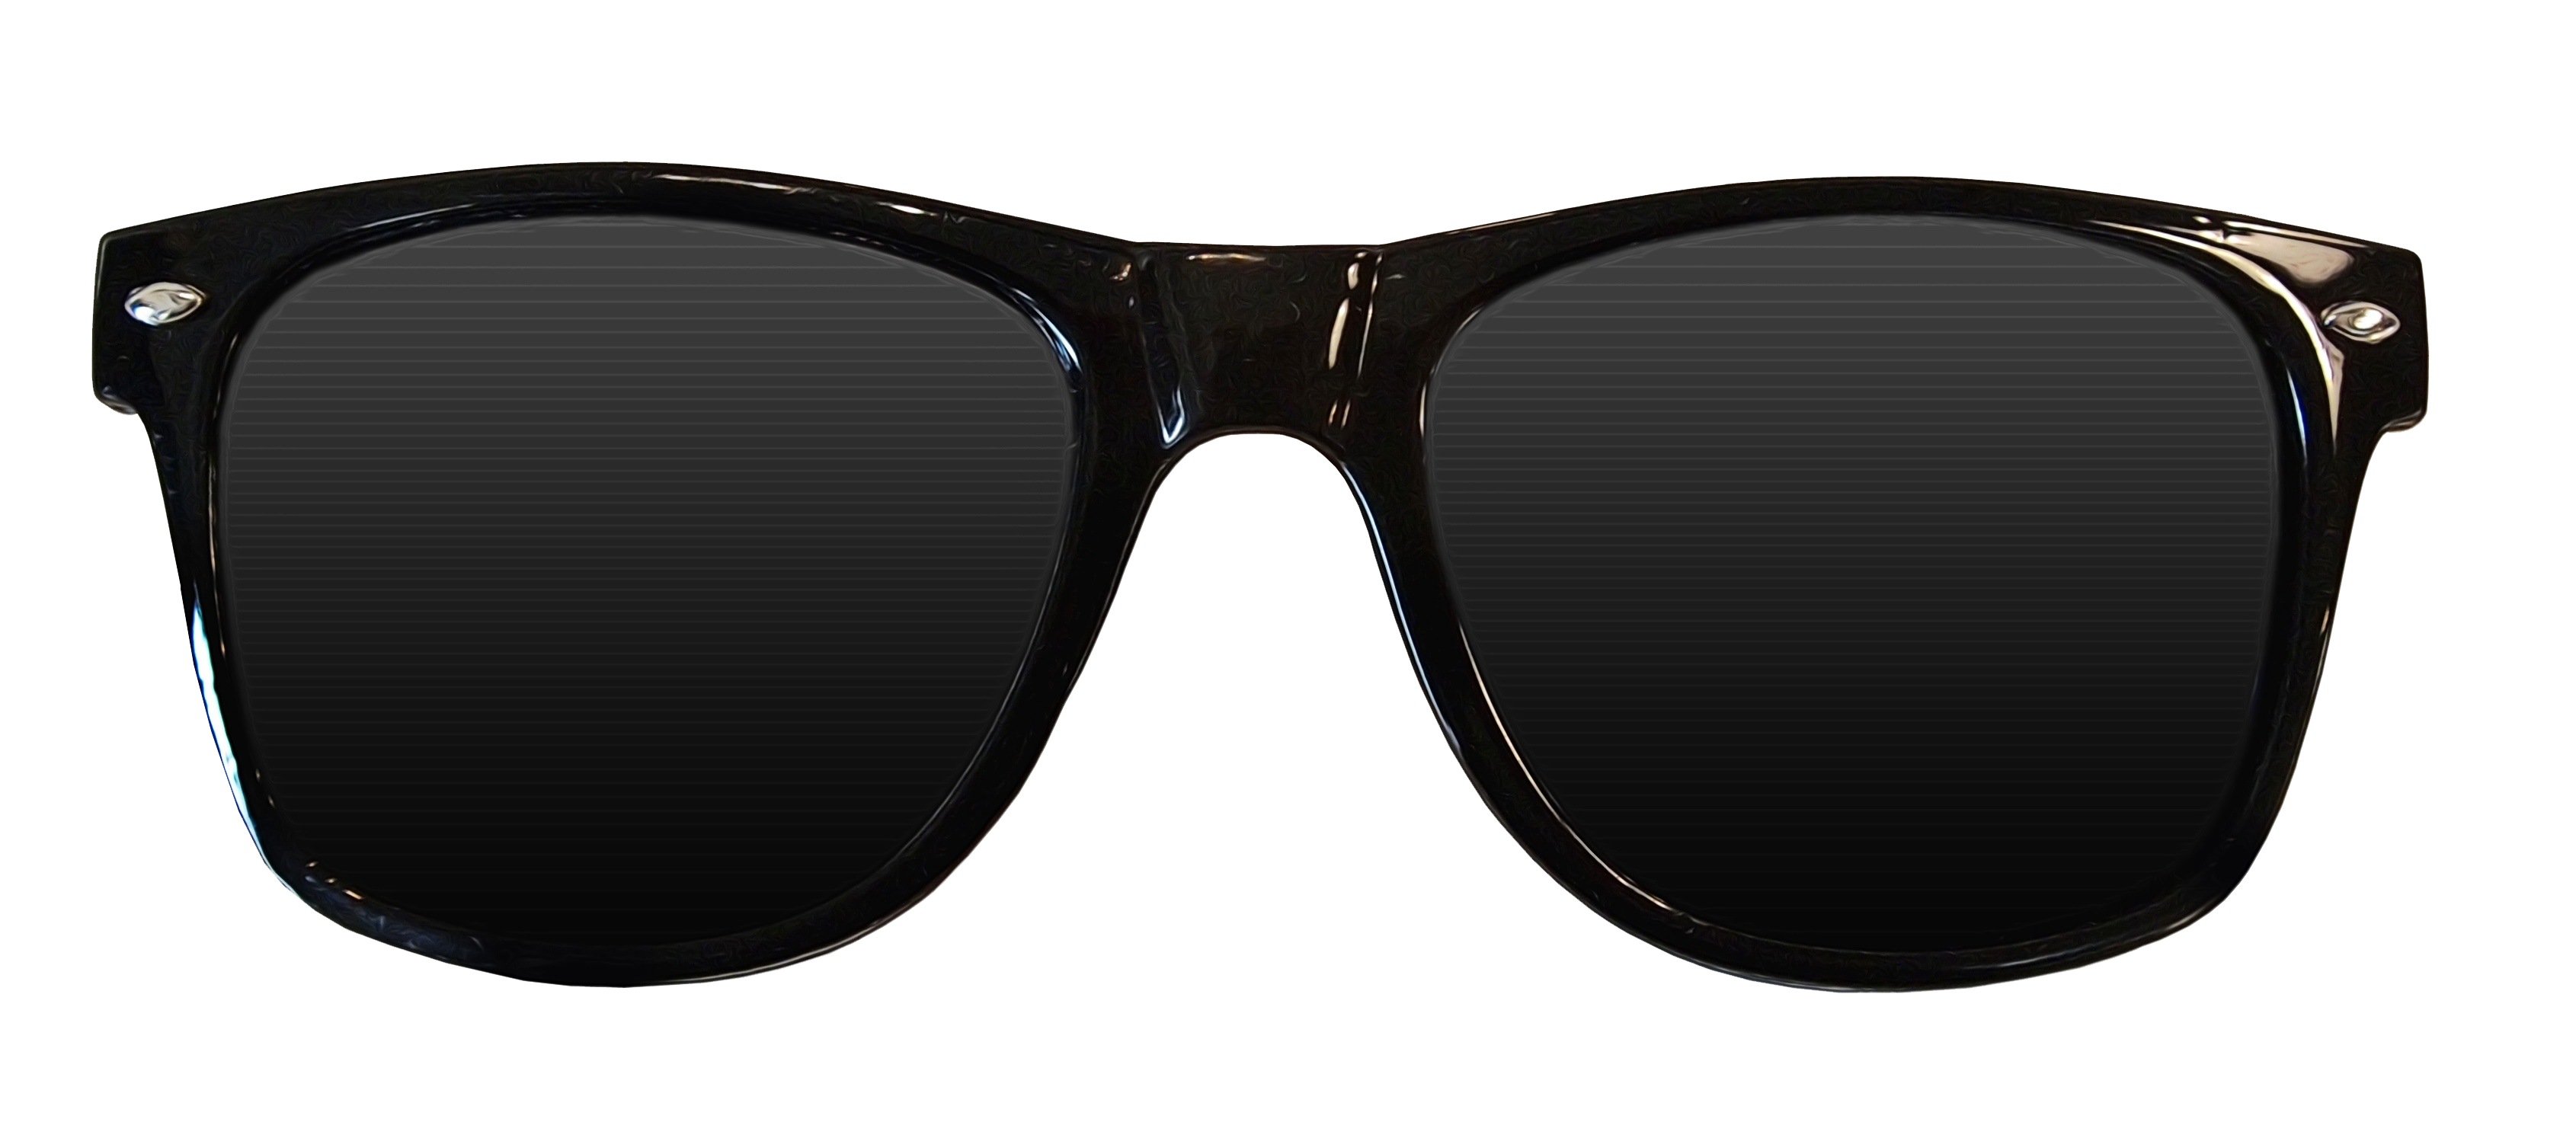 Aviator sunglasses Portable Network Graphics Clip art Transparency ...